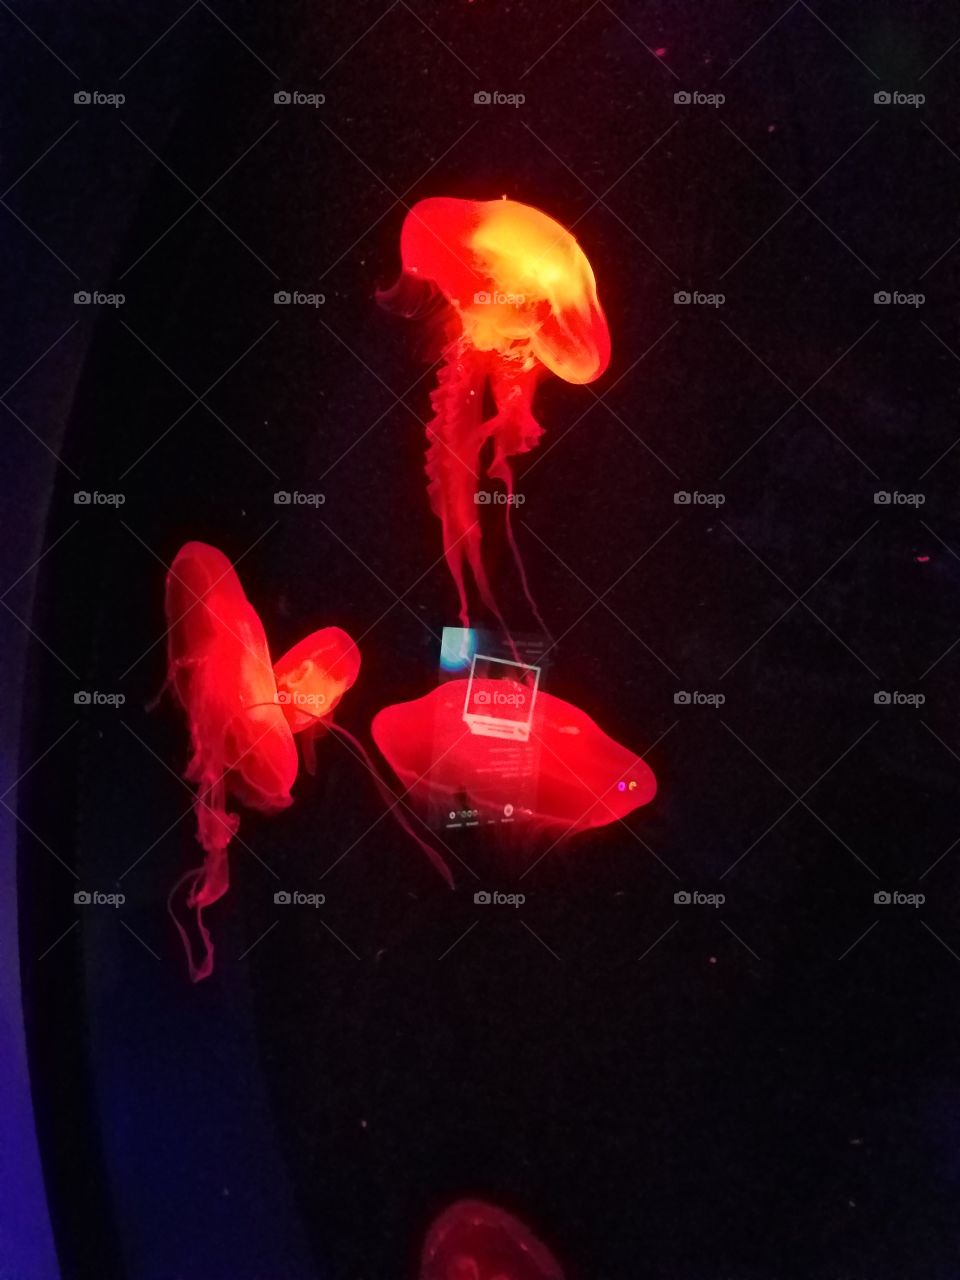 glowing jellyfish